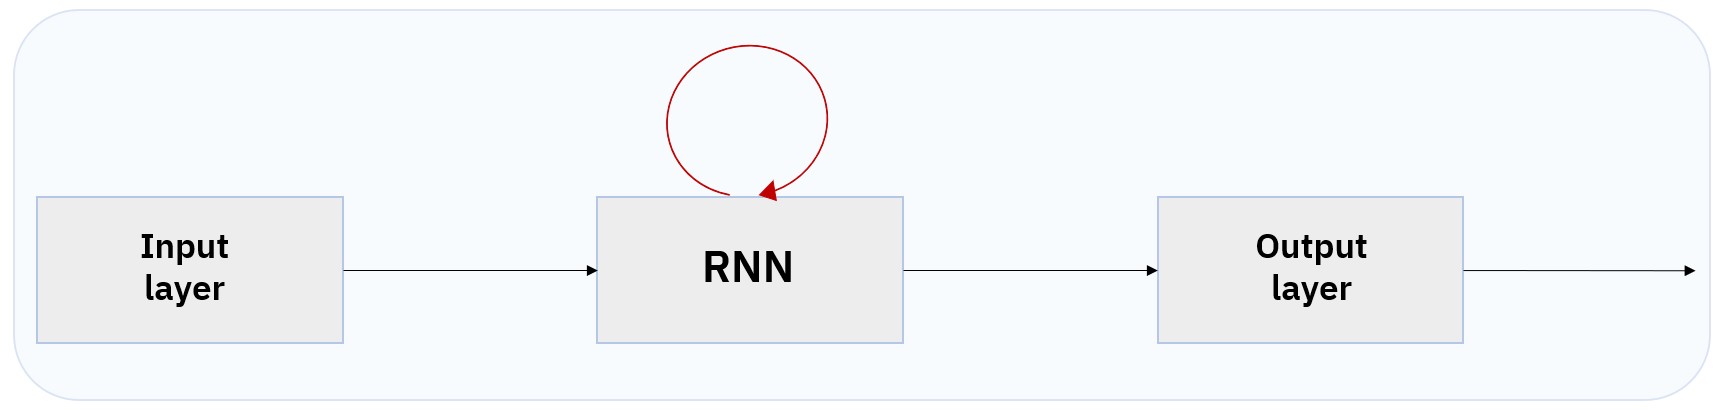 [AI 연구 및 기술 동향] NLP (3) : 순환신경망(RNN: Recurrent Neural Networks) 기반 자연어 처리